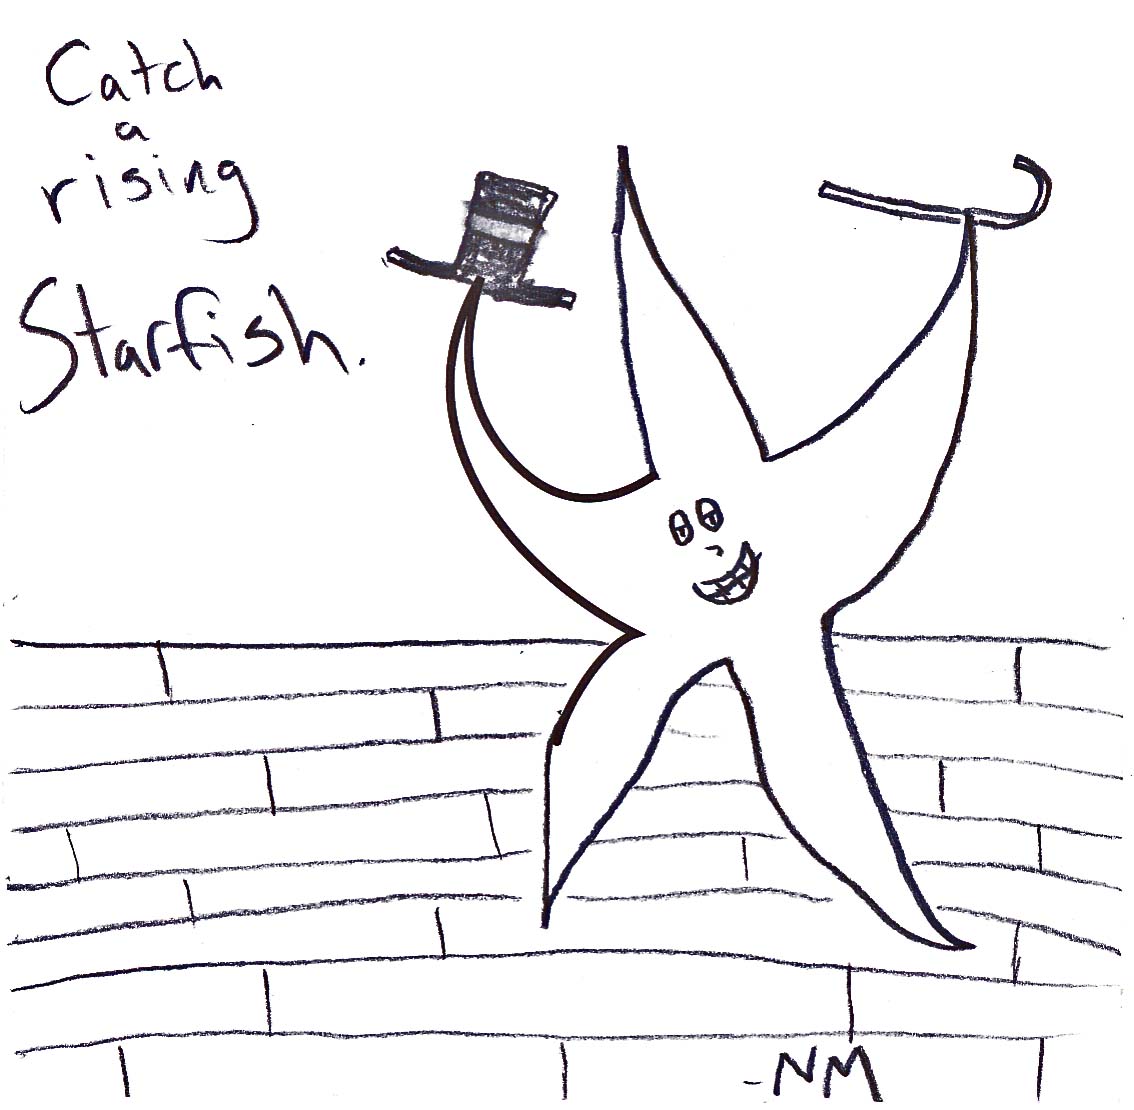 Catch a rising starfish